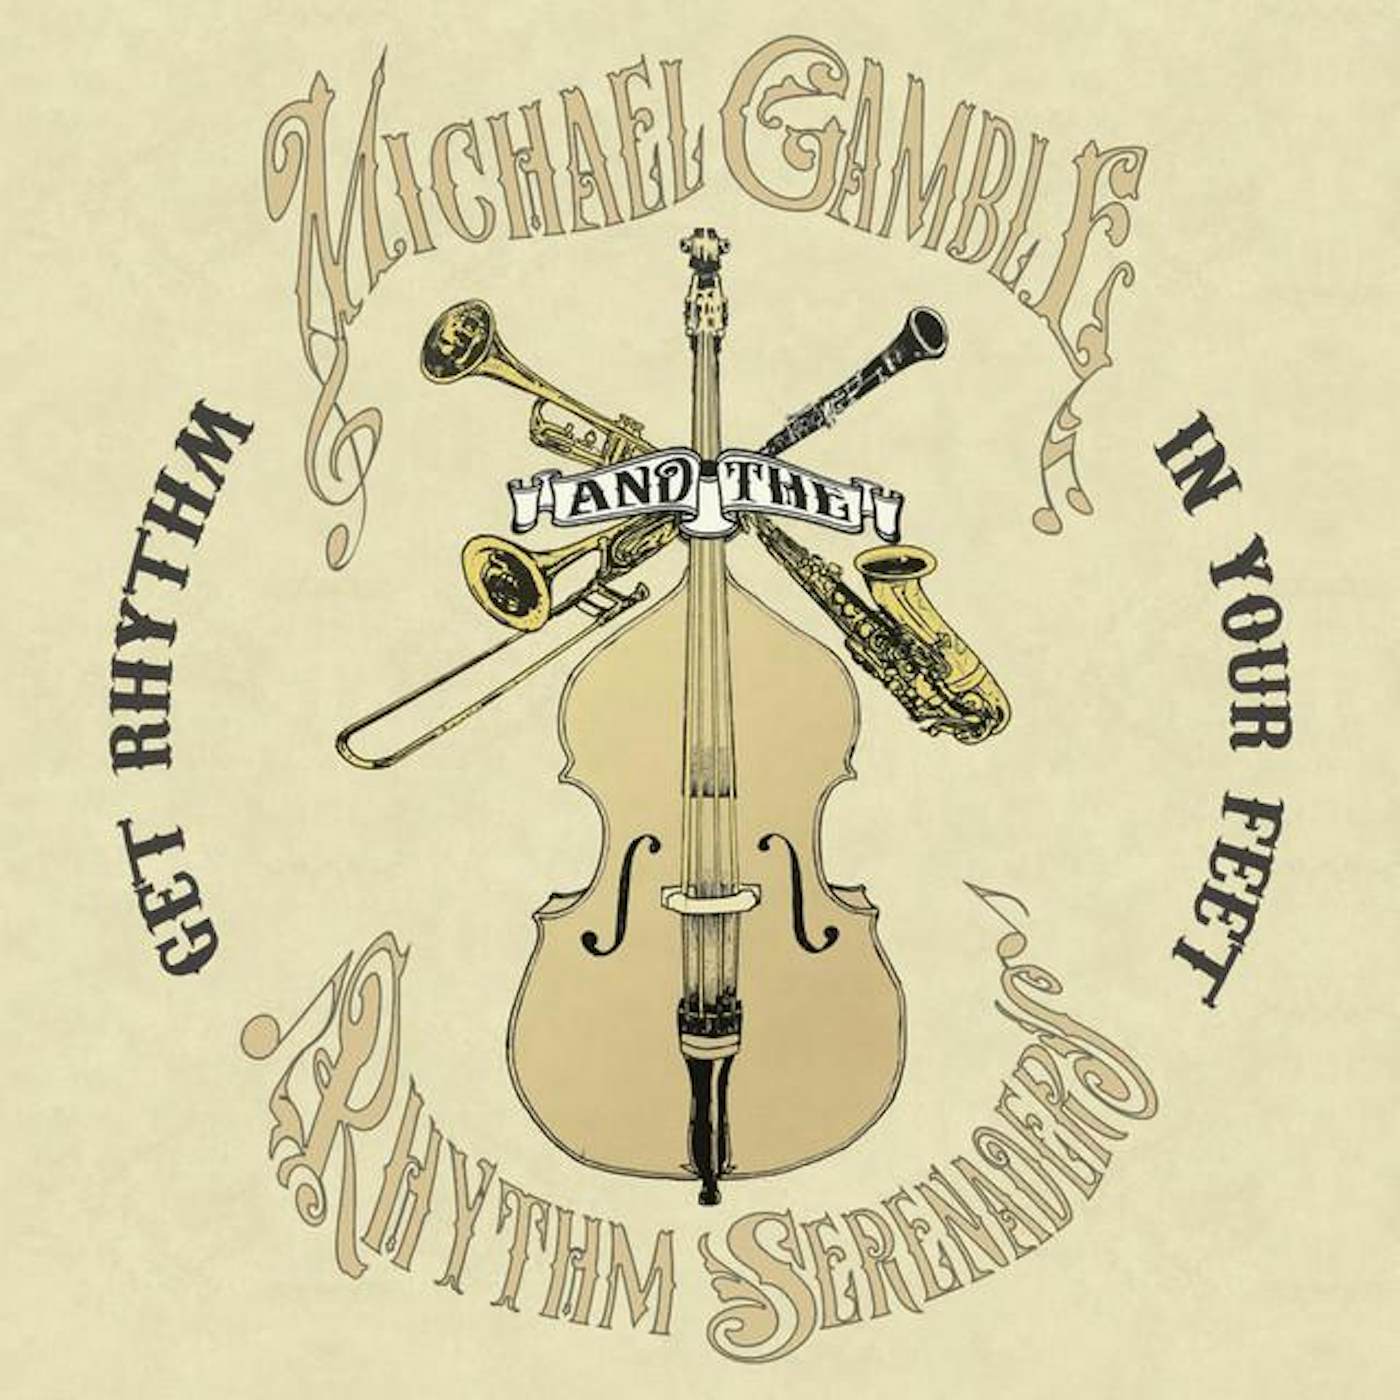 Michael Gamble & The Rhythm Serenaders